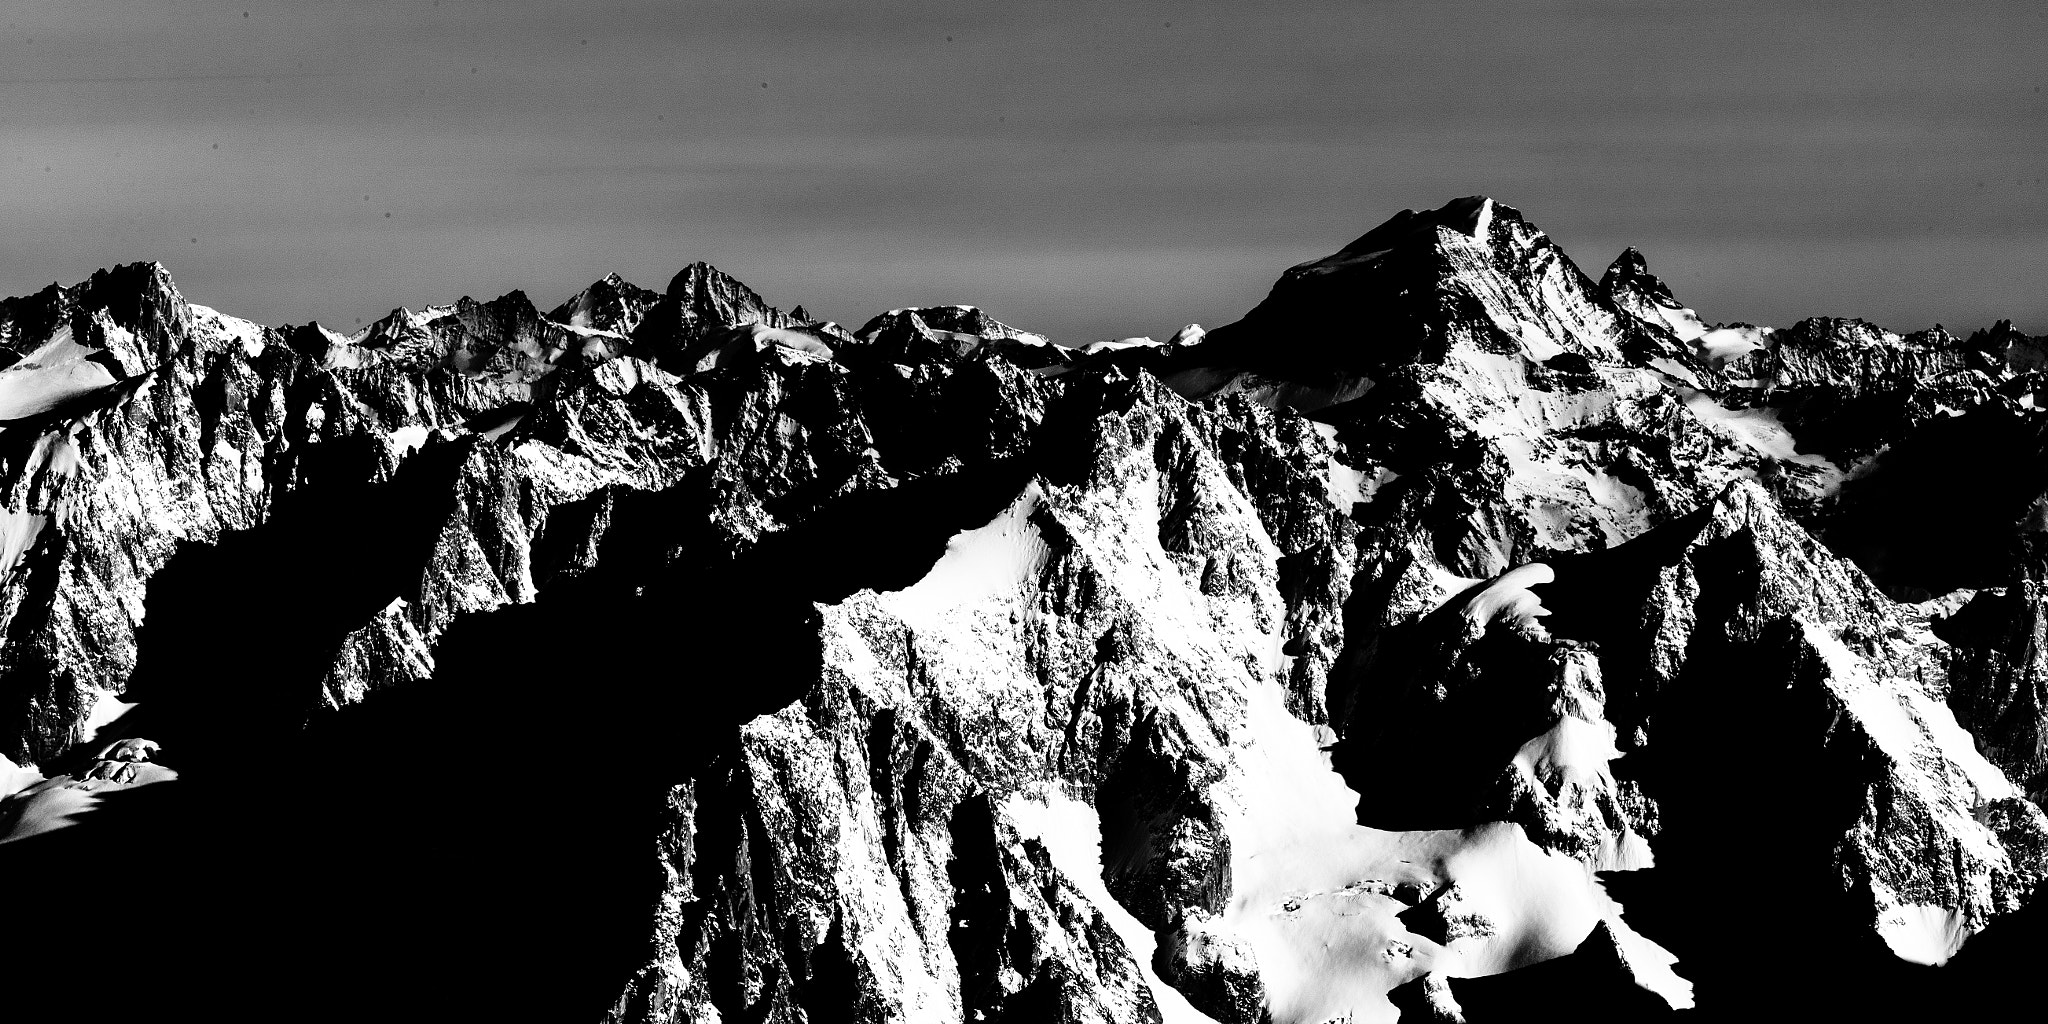 Leica APO-Telyt-M 135mm F3.4 ASPH sample photo. The mont blanc massif photography